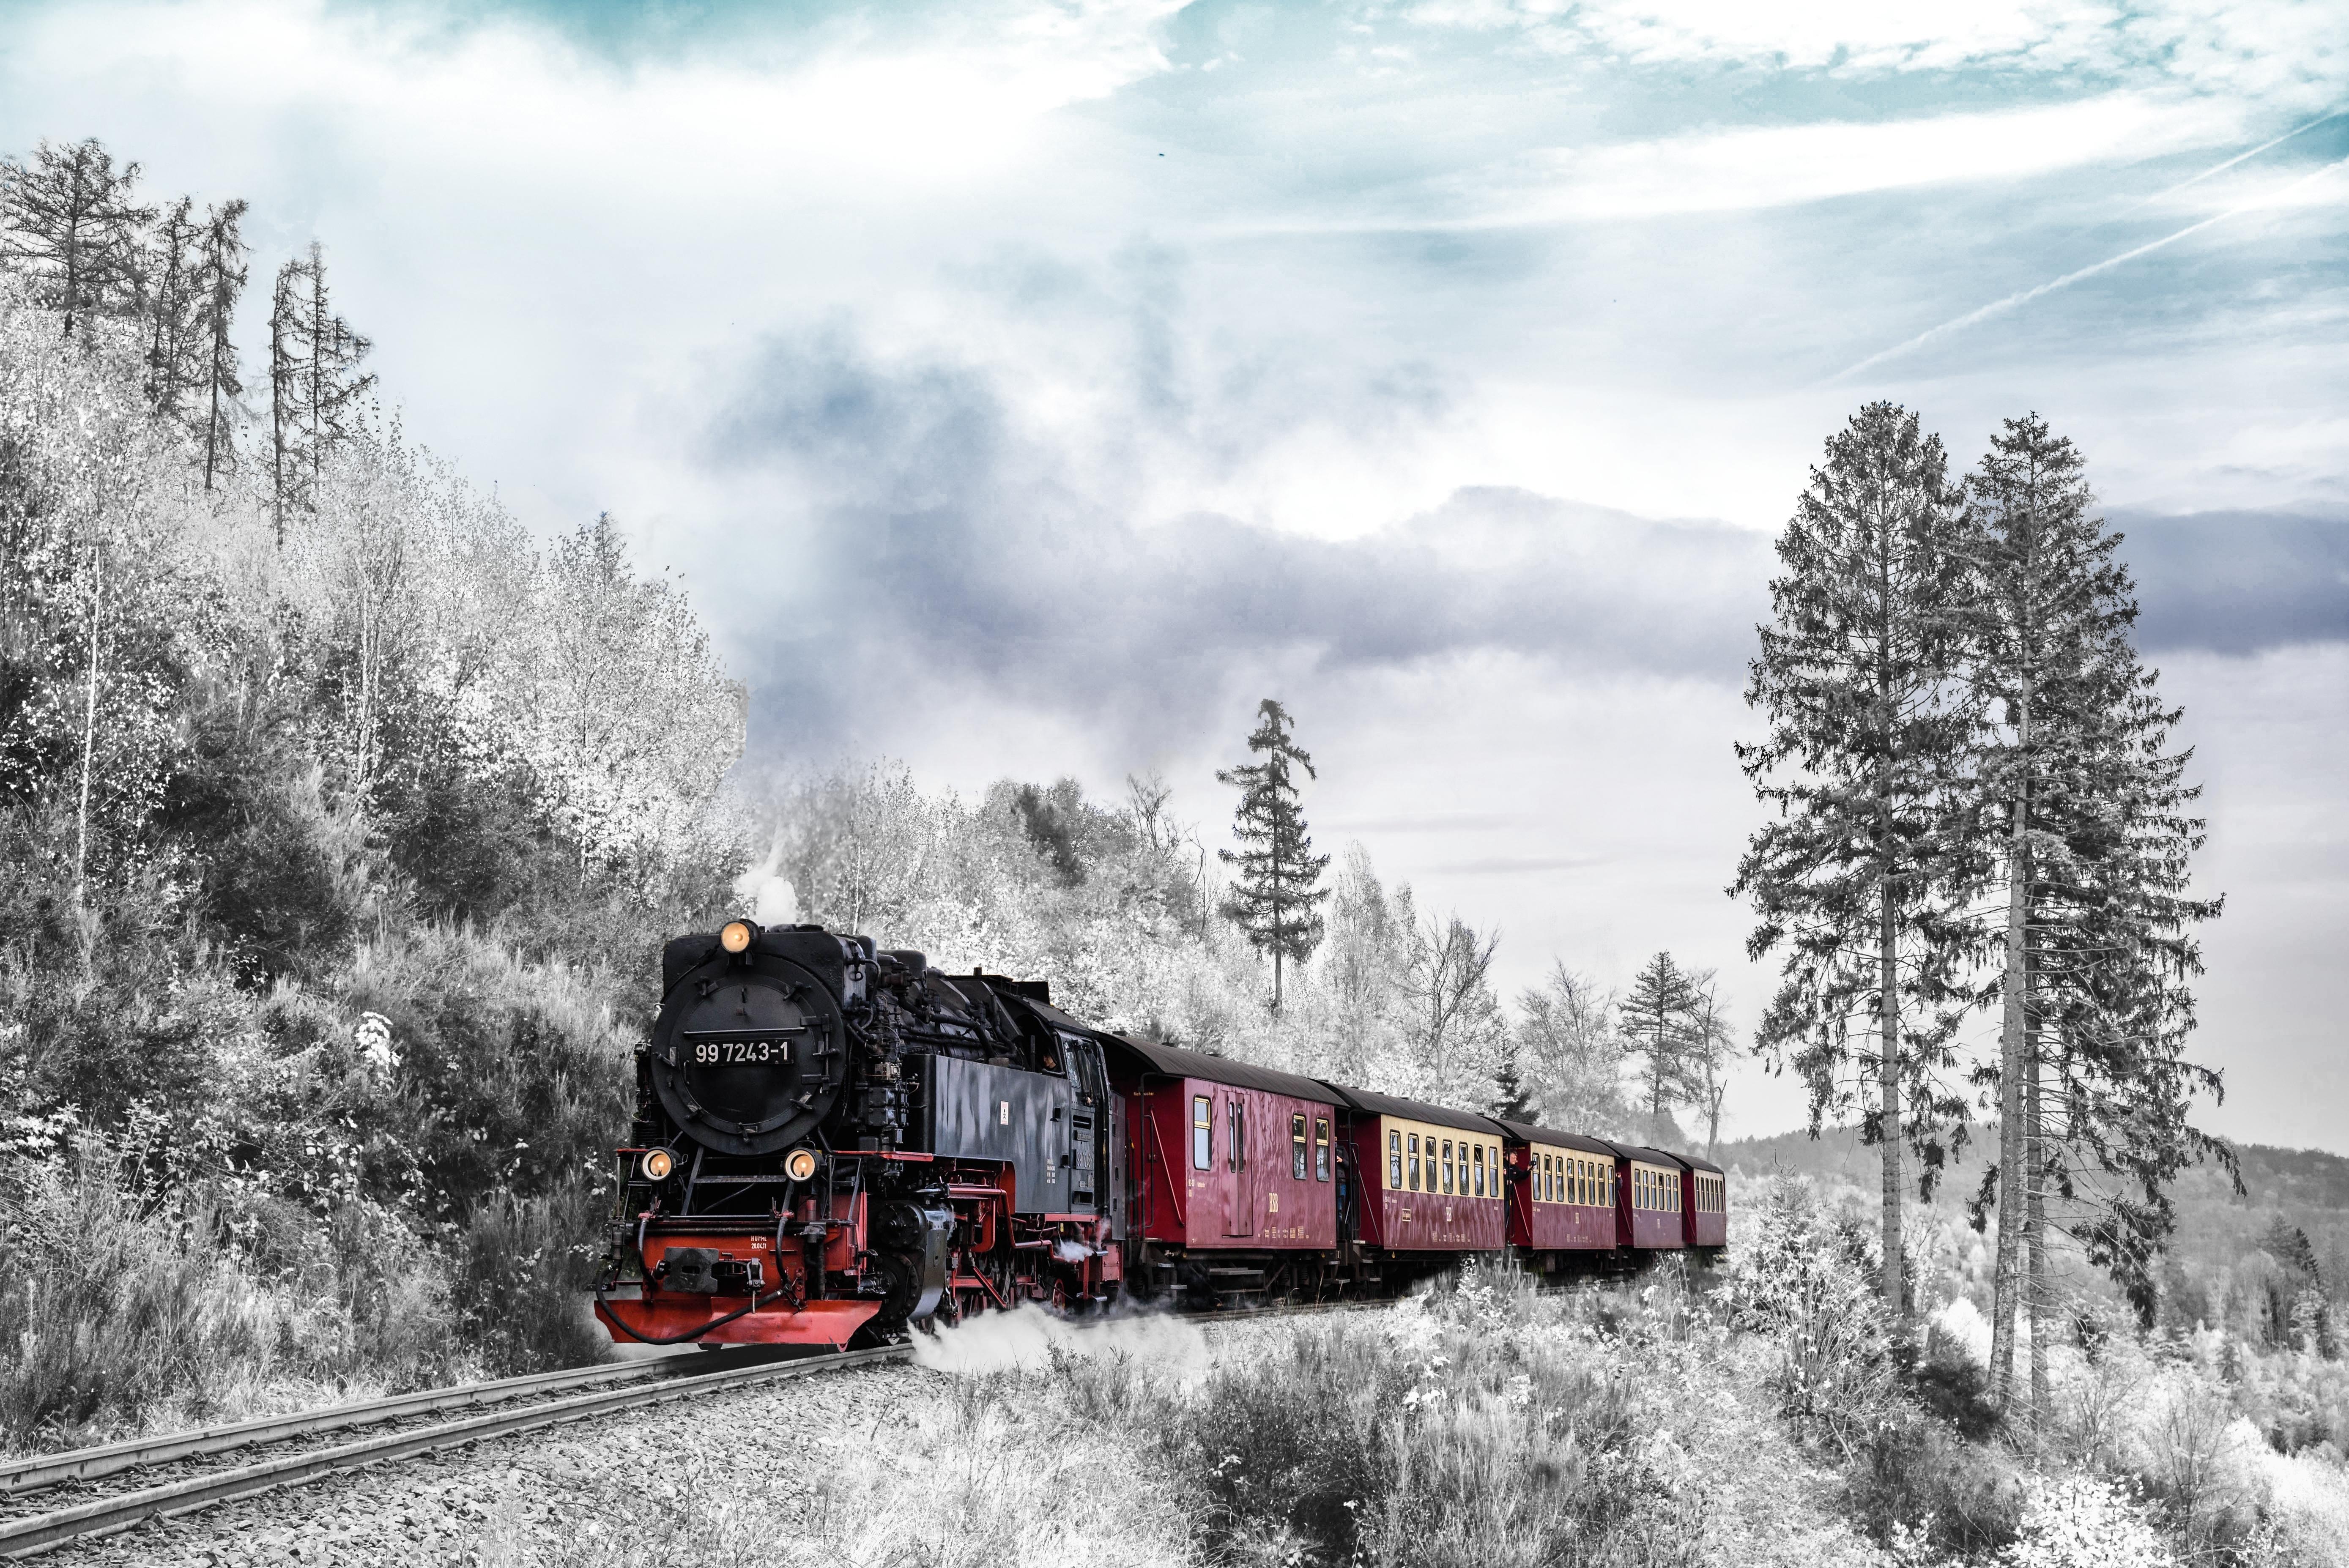 Download wallpaper 5556x3709 train, forest, winter, railway, snow HD background